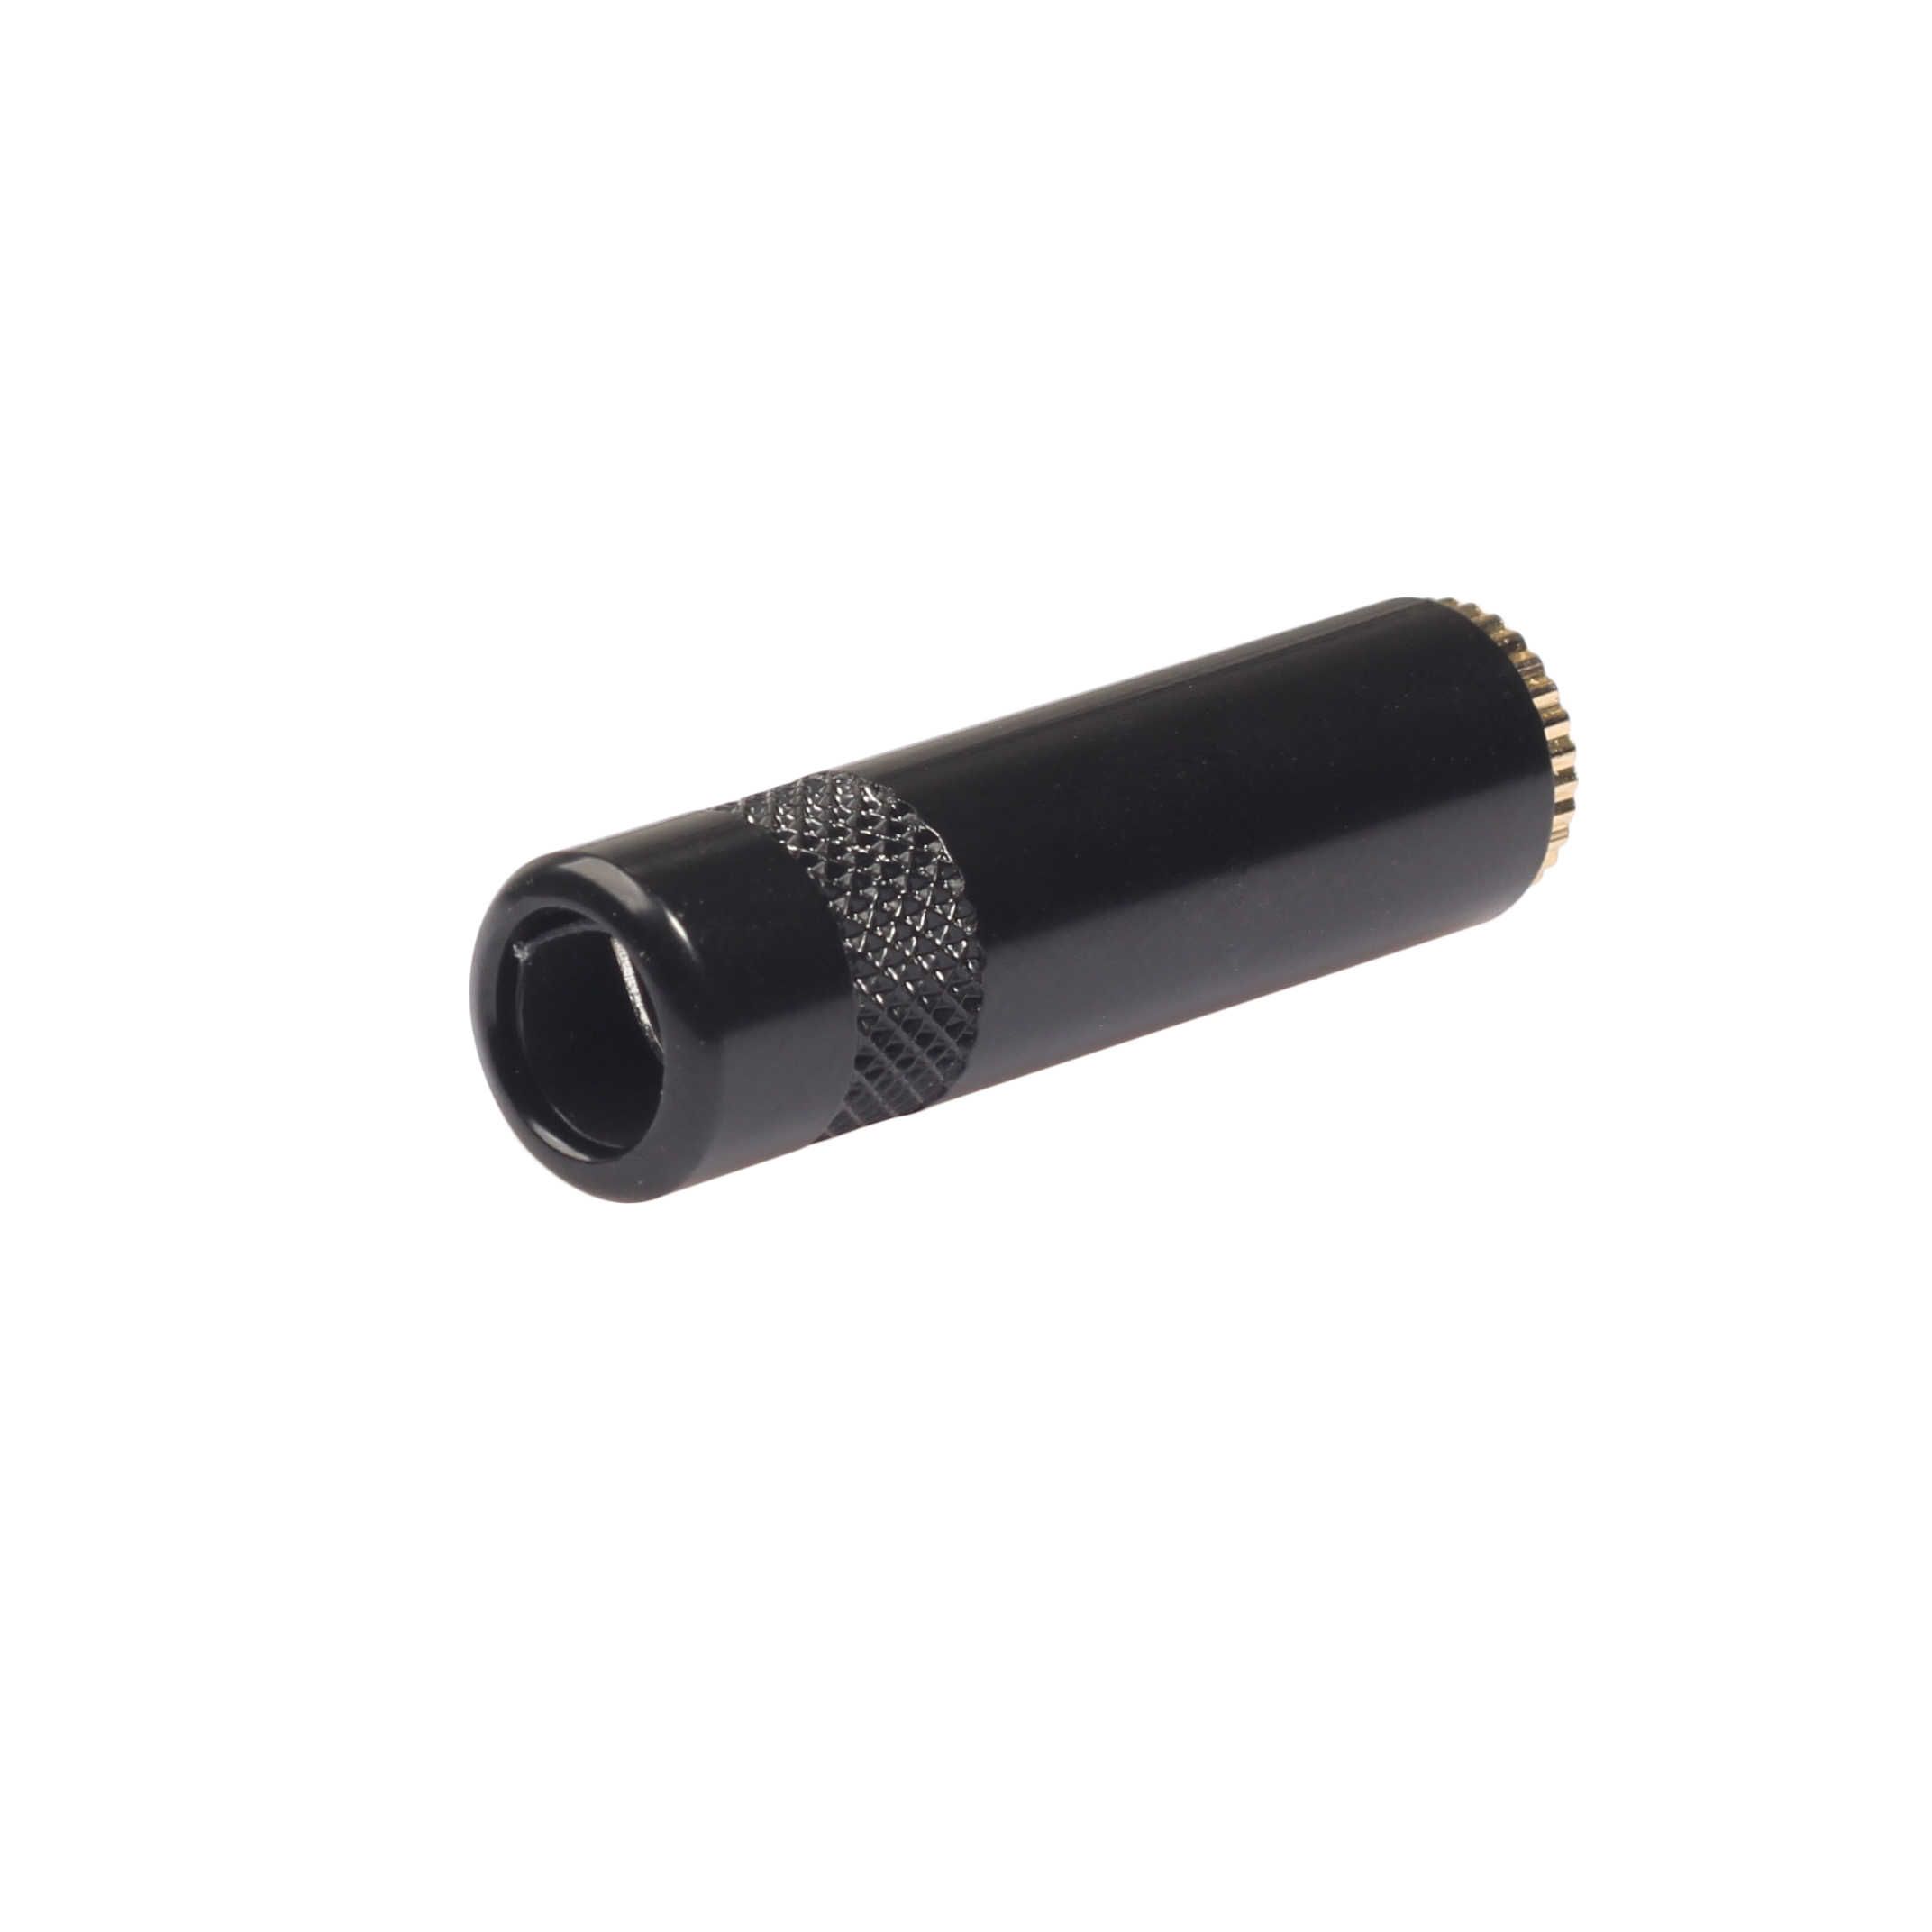 REXLIS-35mm-Female-Soldering-Plug-TC227-Black-Jack-Audio-female-Jack-3-pole-Stereo-Socket-Gold-Plate-1526860